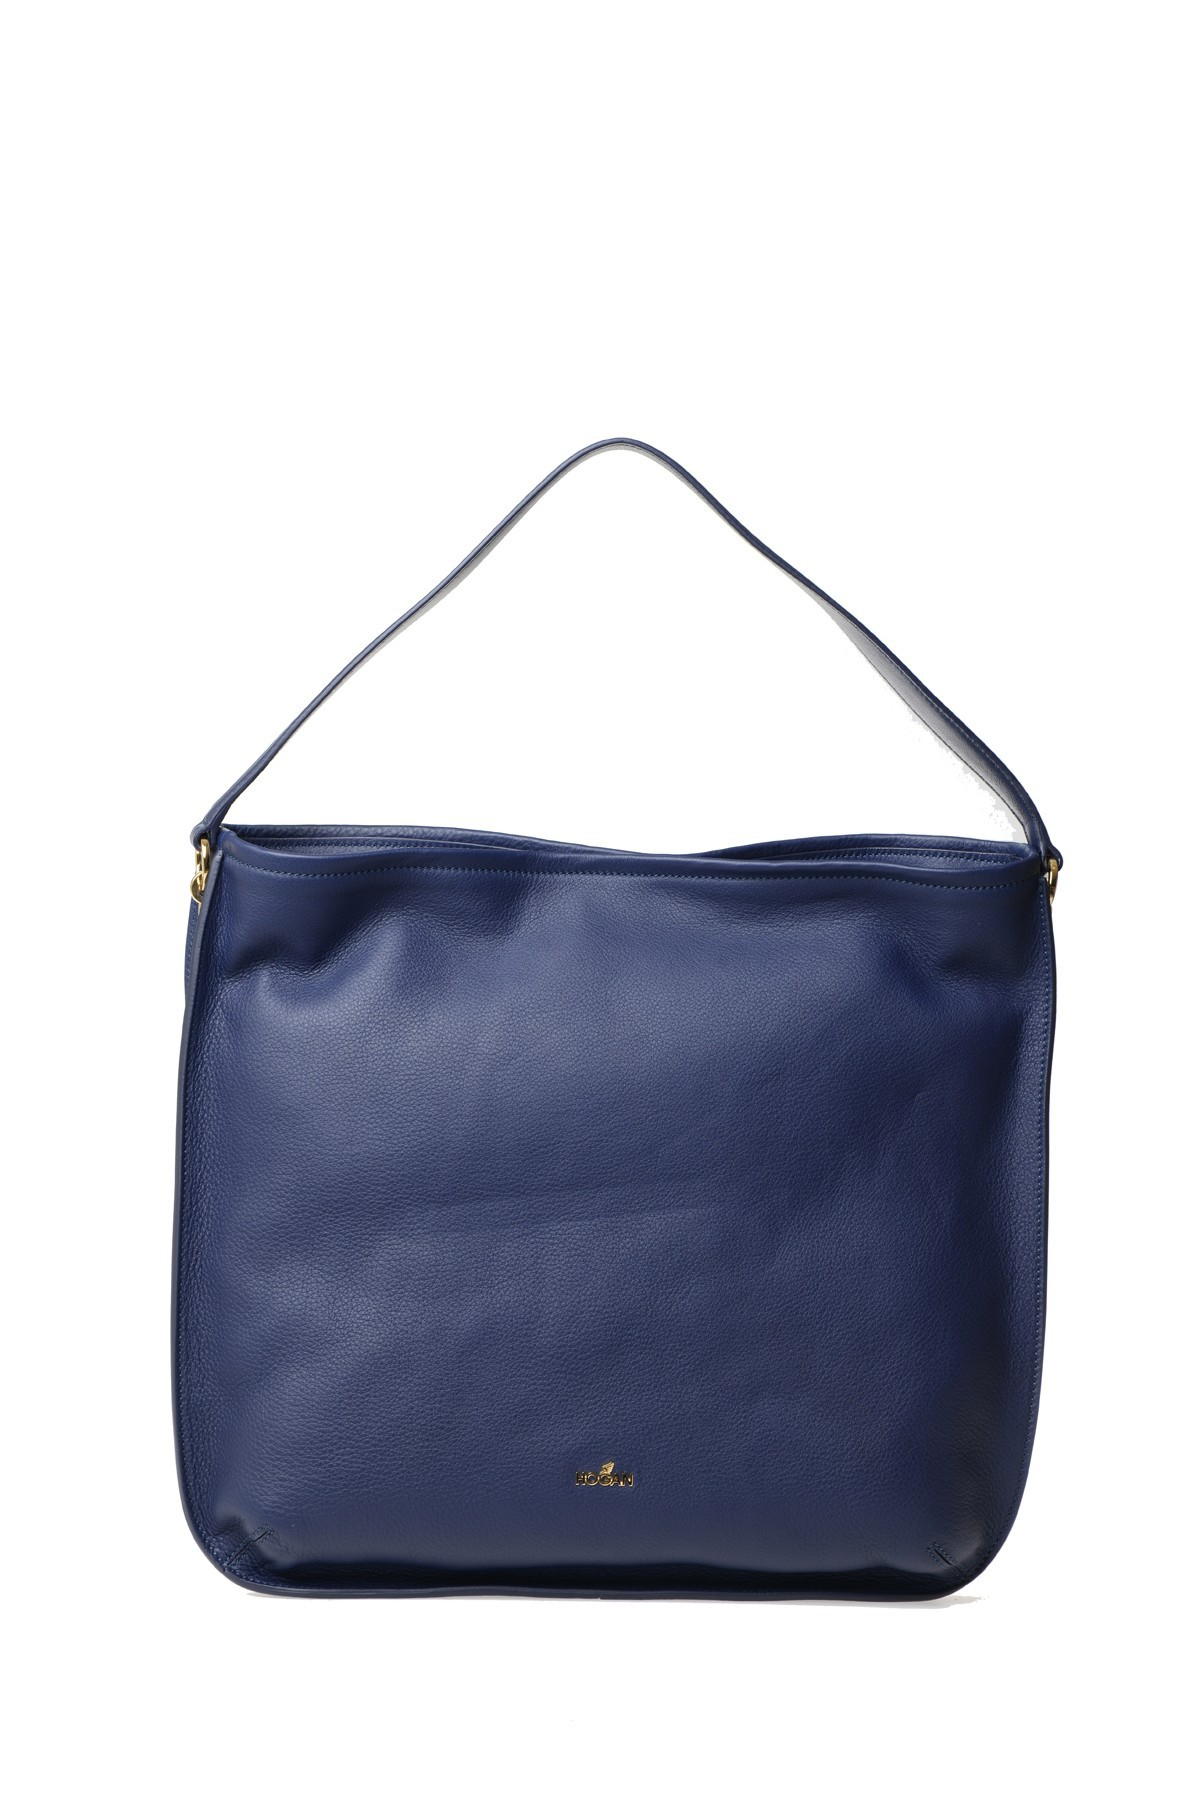 Hogan Hobo Bag In Pelel Martellata in Blue (DARK BLUE) | Lyst